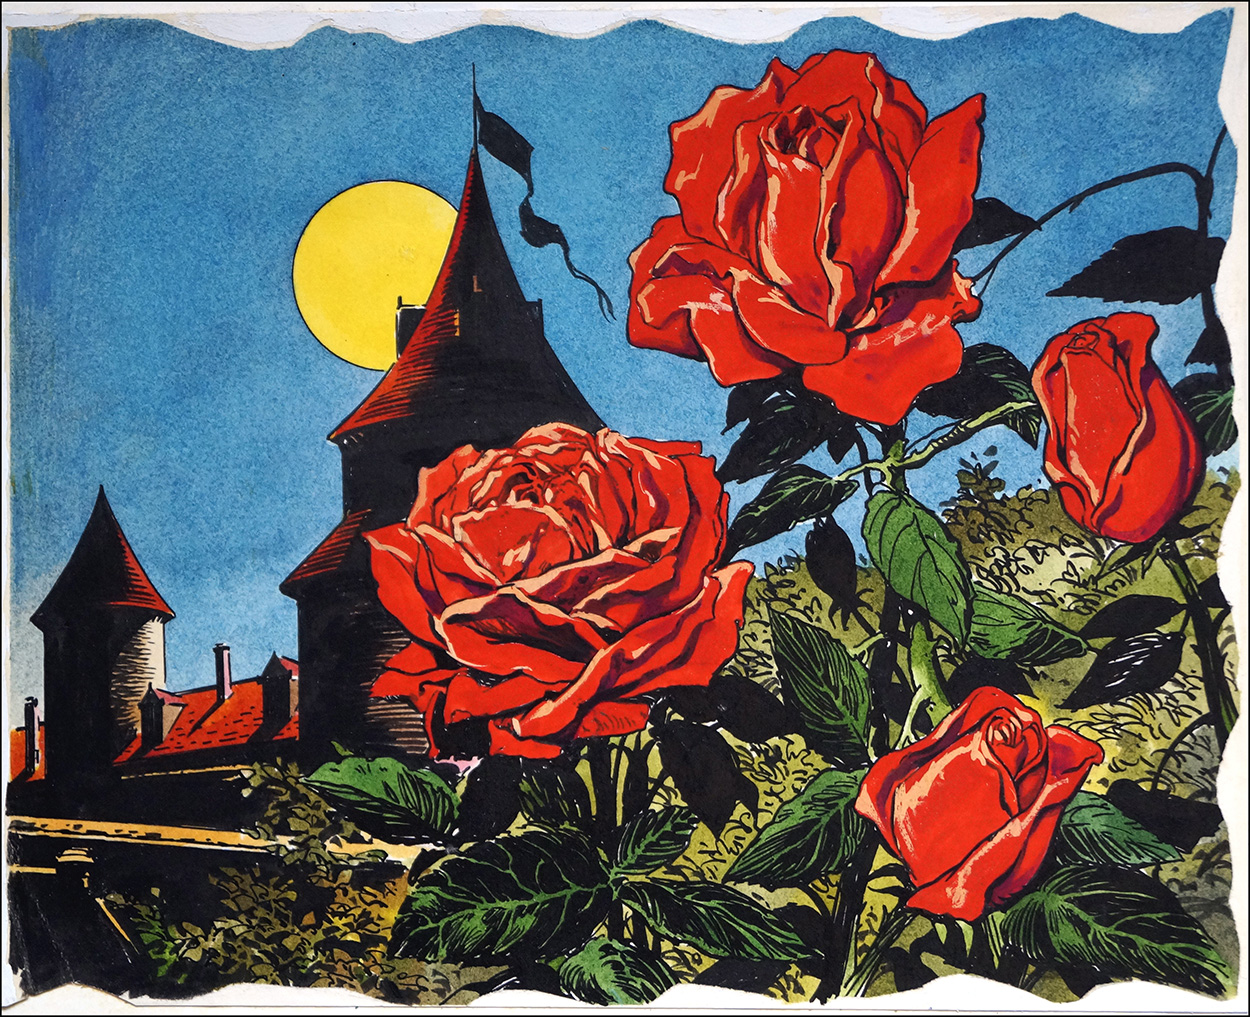 Sleeping Beauty - Red Roses (Original) art by Sleeping Beauty (Blasco) Art at The Illustration Art Gallery